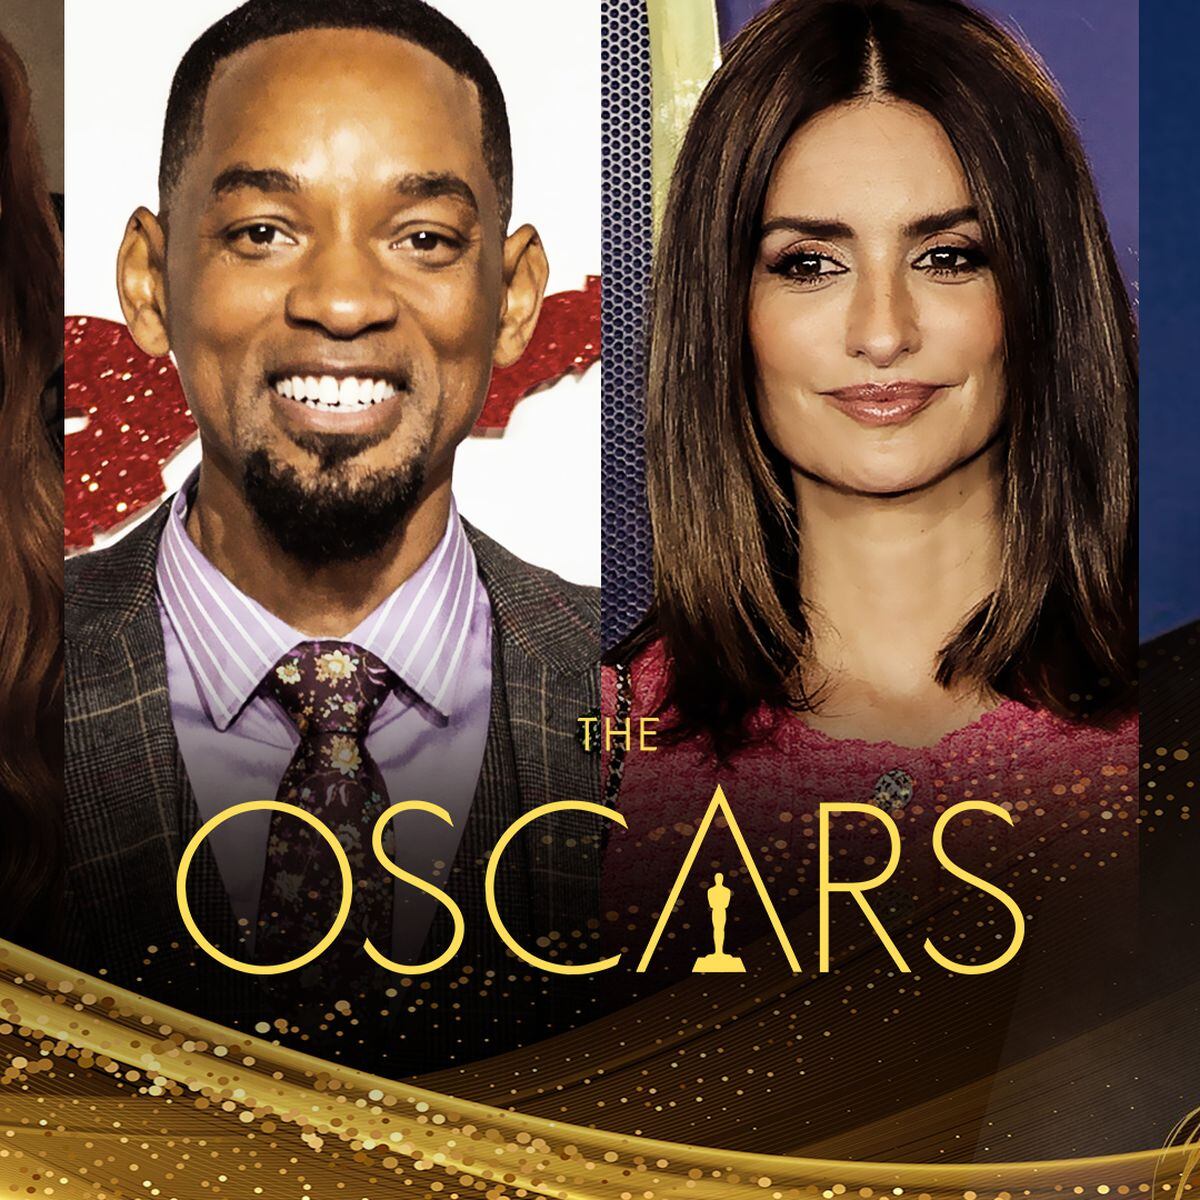 Oscars 2022: Jessica Chastain gana como Mejor Actriz